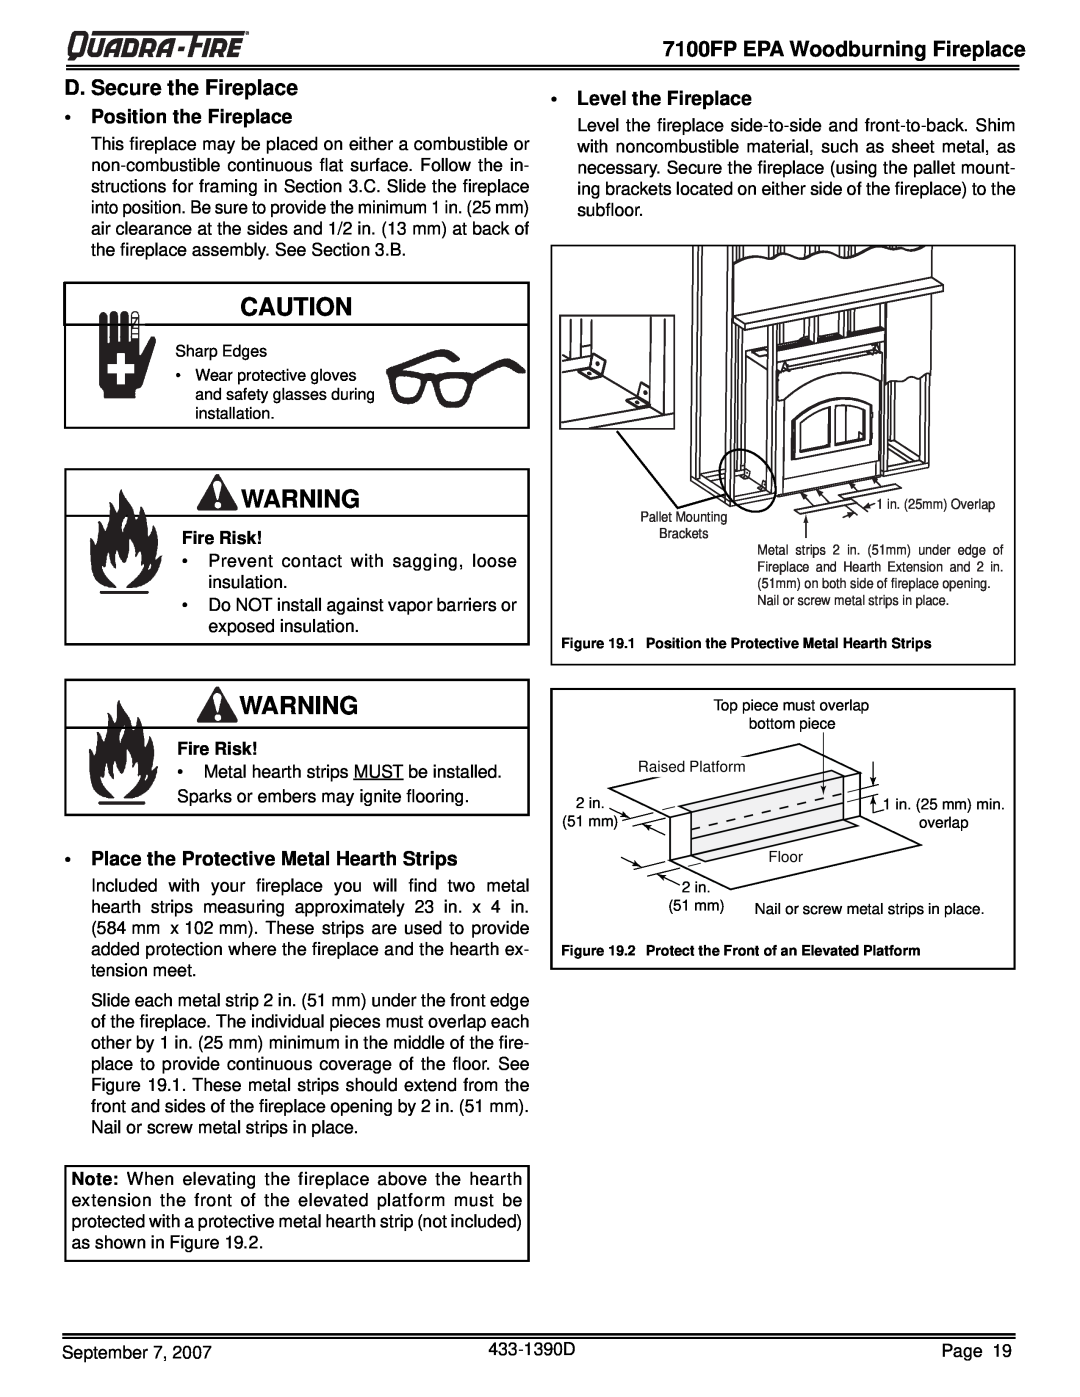 Quadra-Fire 7100FP-BK-B 7100FP EPA Woodburning Fireplace, D. Secure the Fireplace, •Position the Fireplace, Fire Risk 